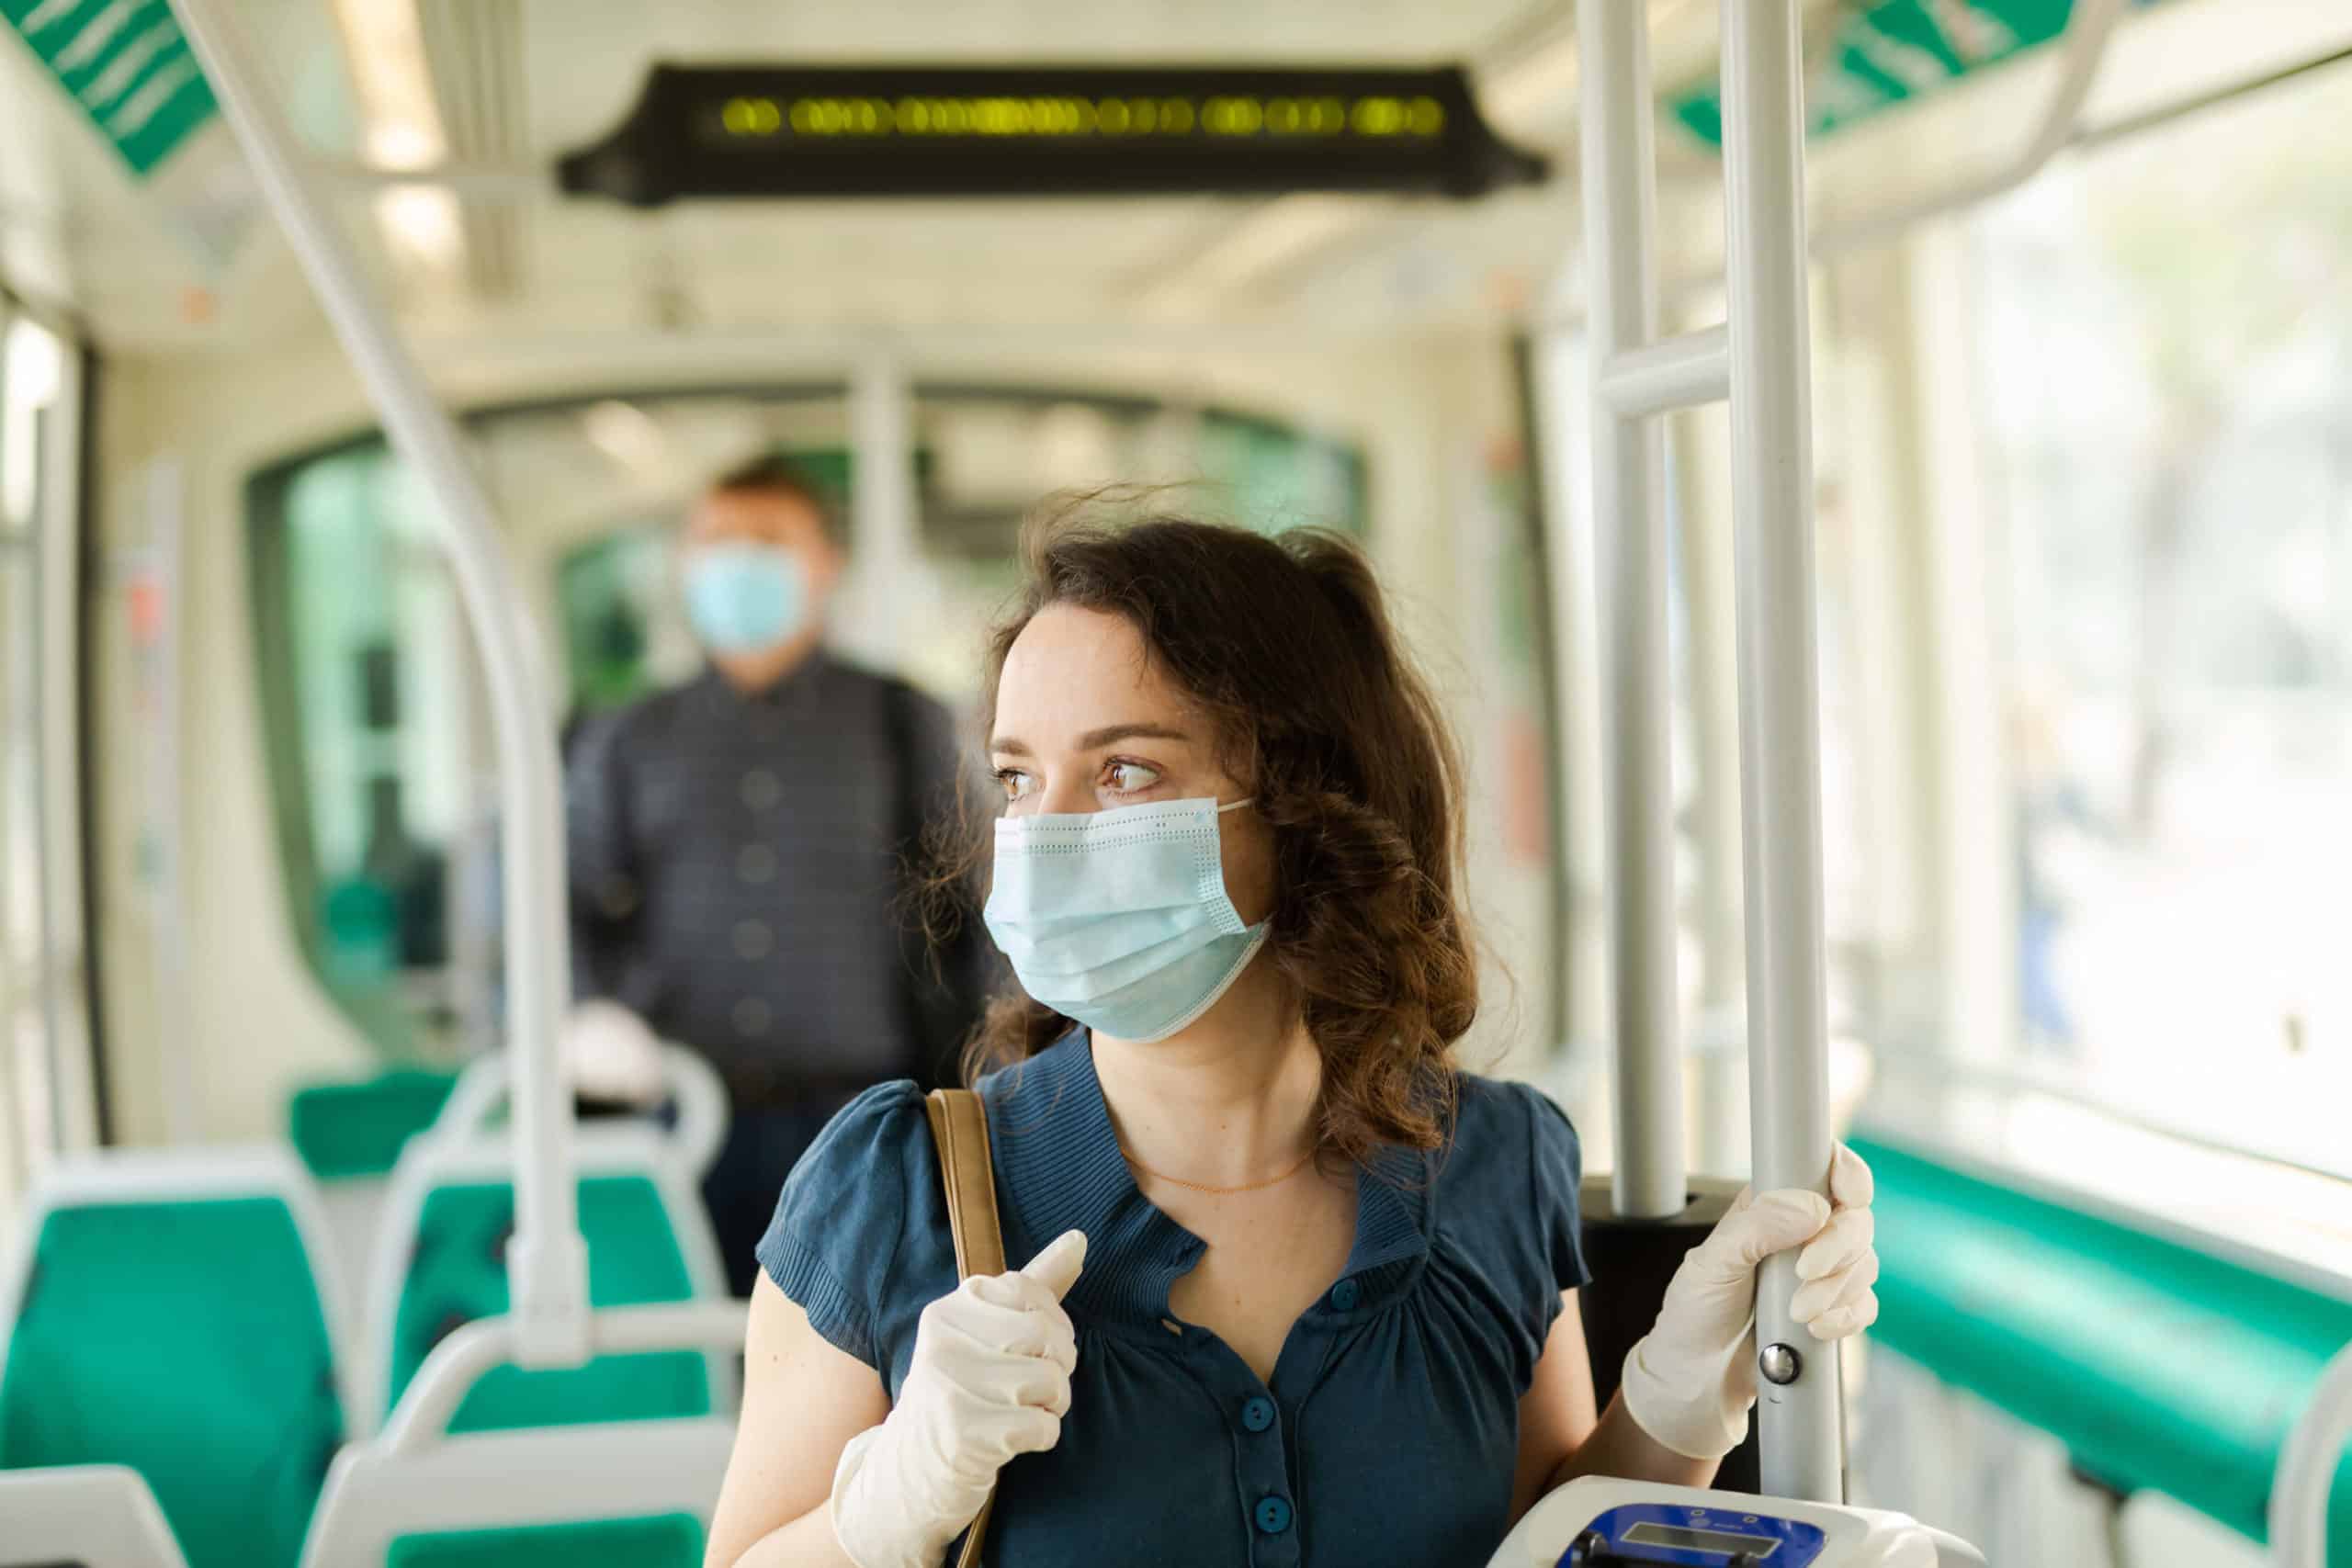 Masked woman riding train